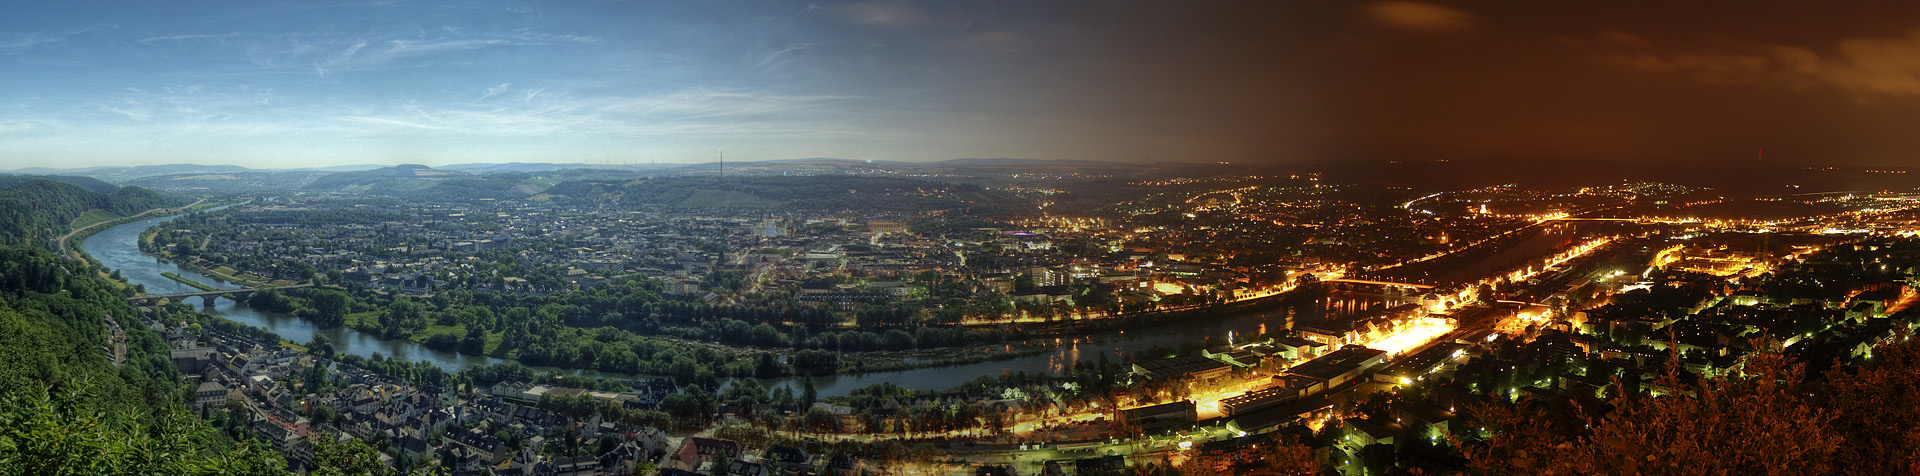 Trier - Day to Night Panorama